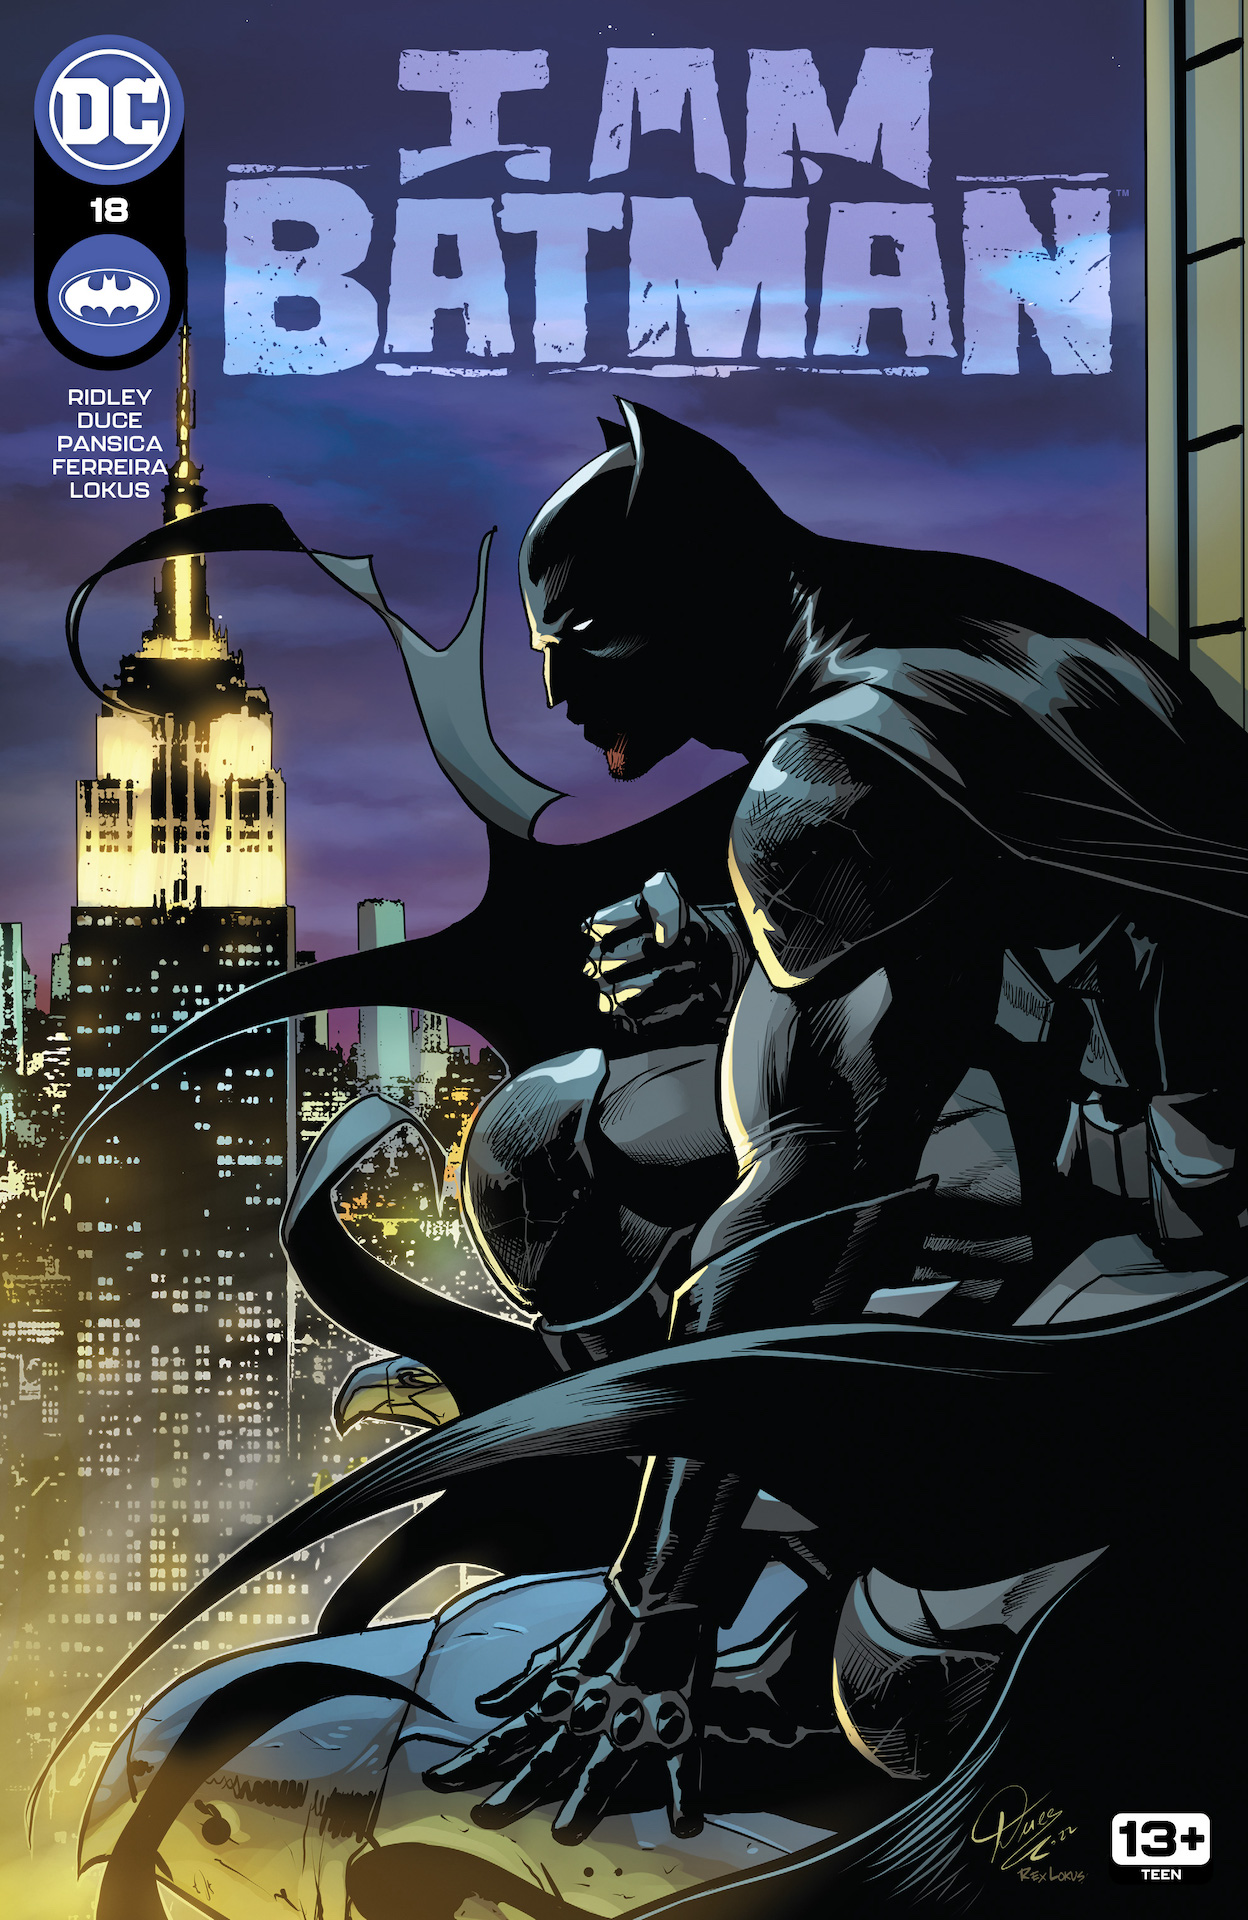 DC Preview: I Am Batman #18